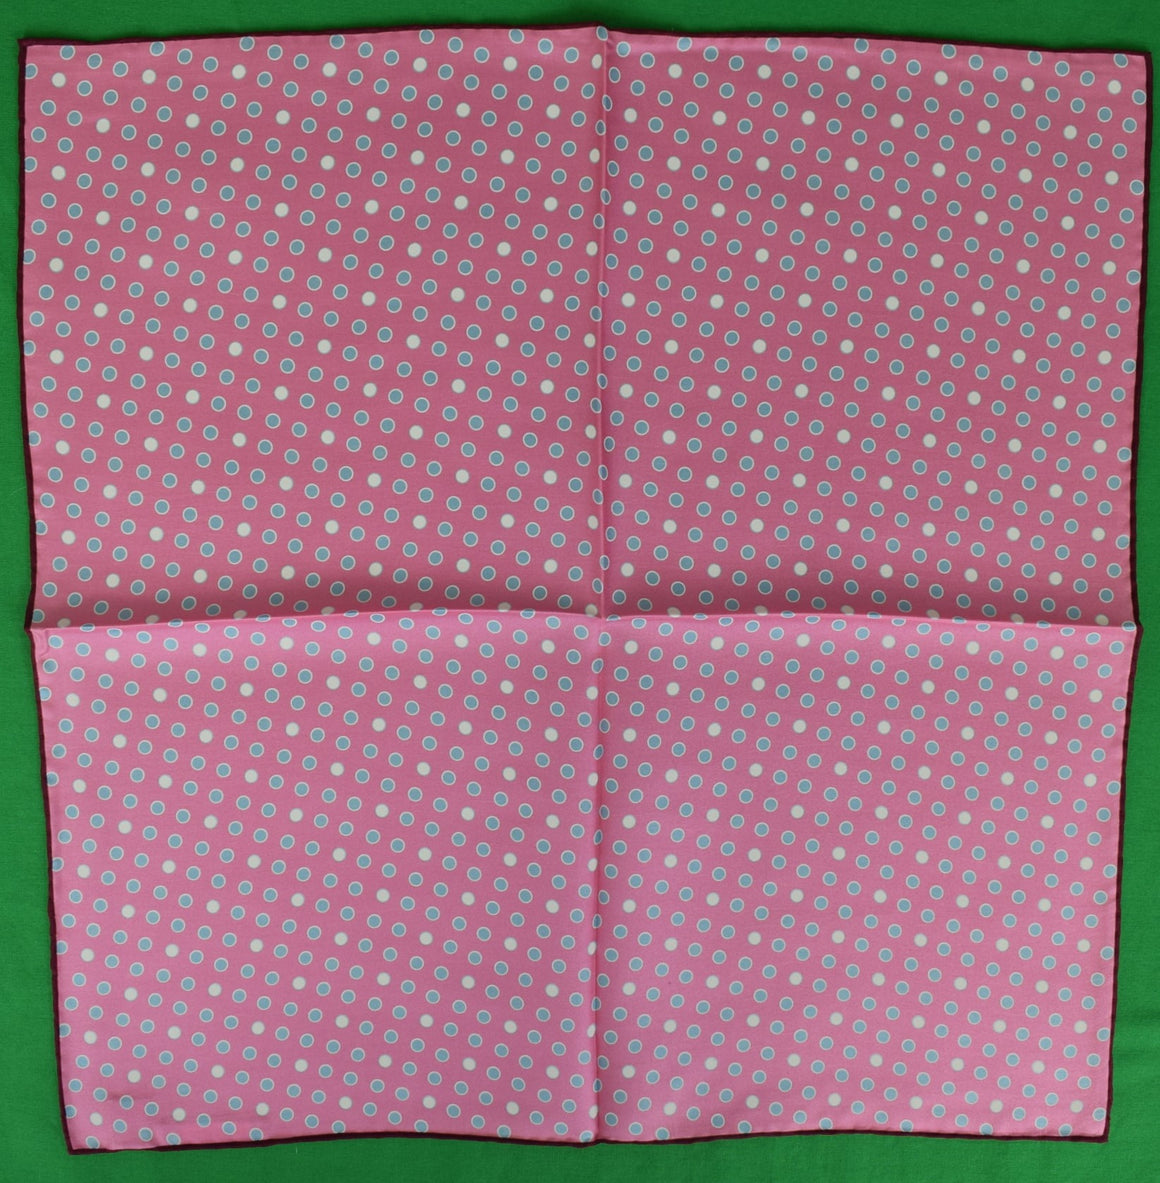 Seaward & Stearn London Pink Dots English Silk Pocket Square (NWOT)